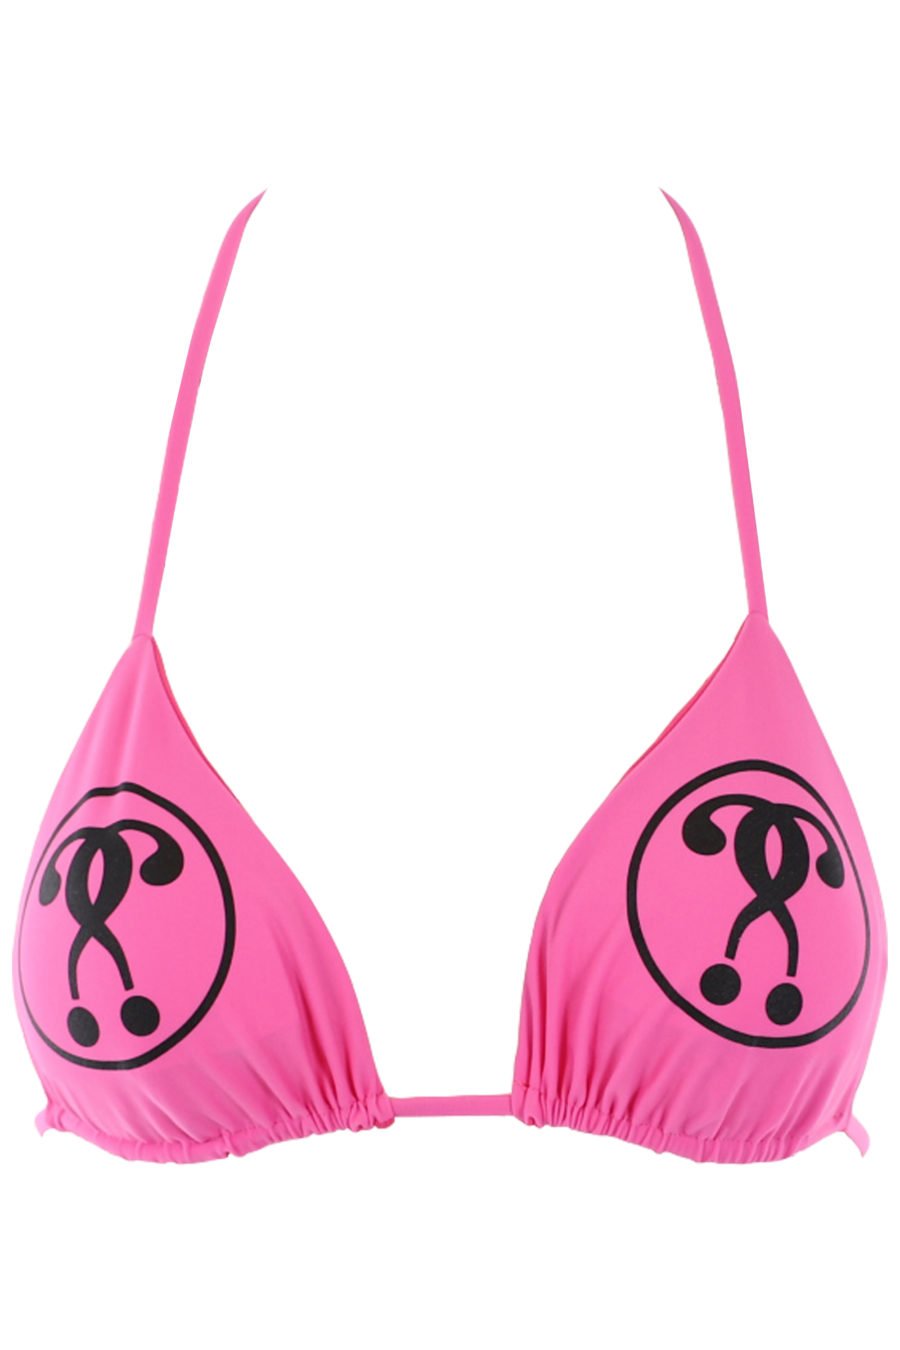 Fuchsia bikini top with double question logo - IMG 0780